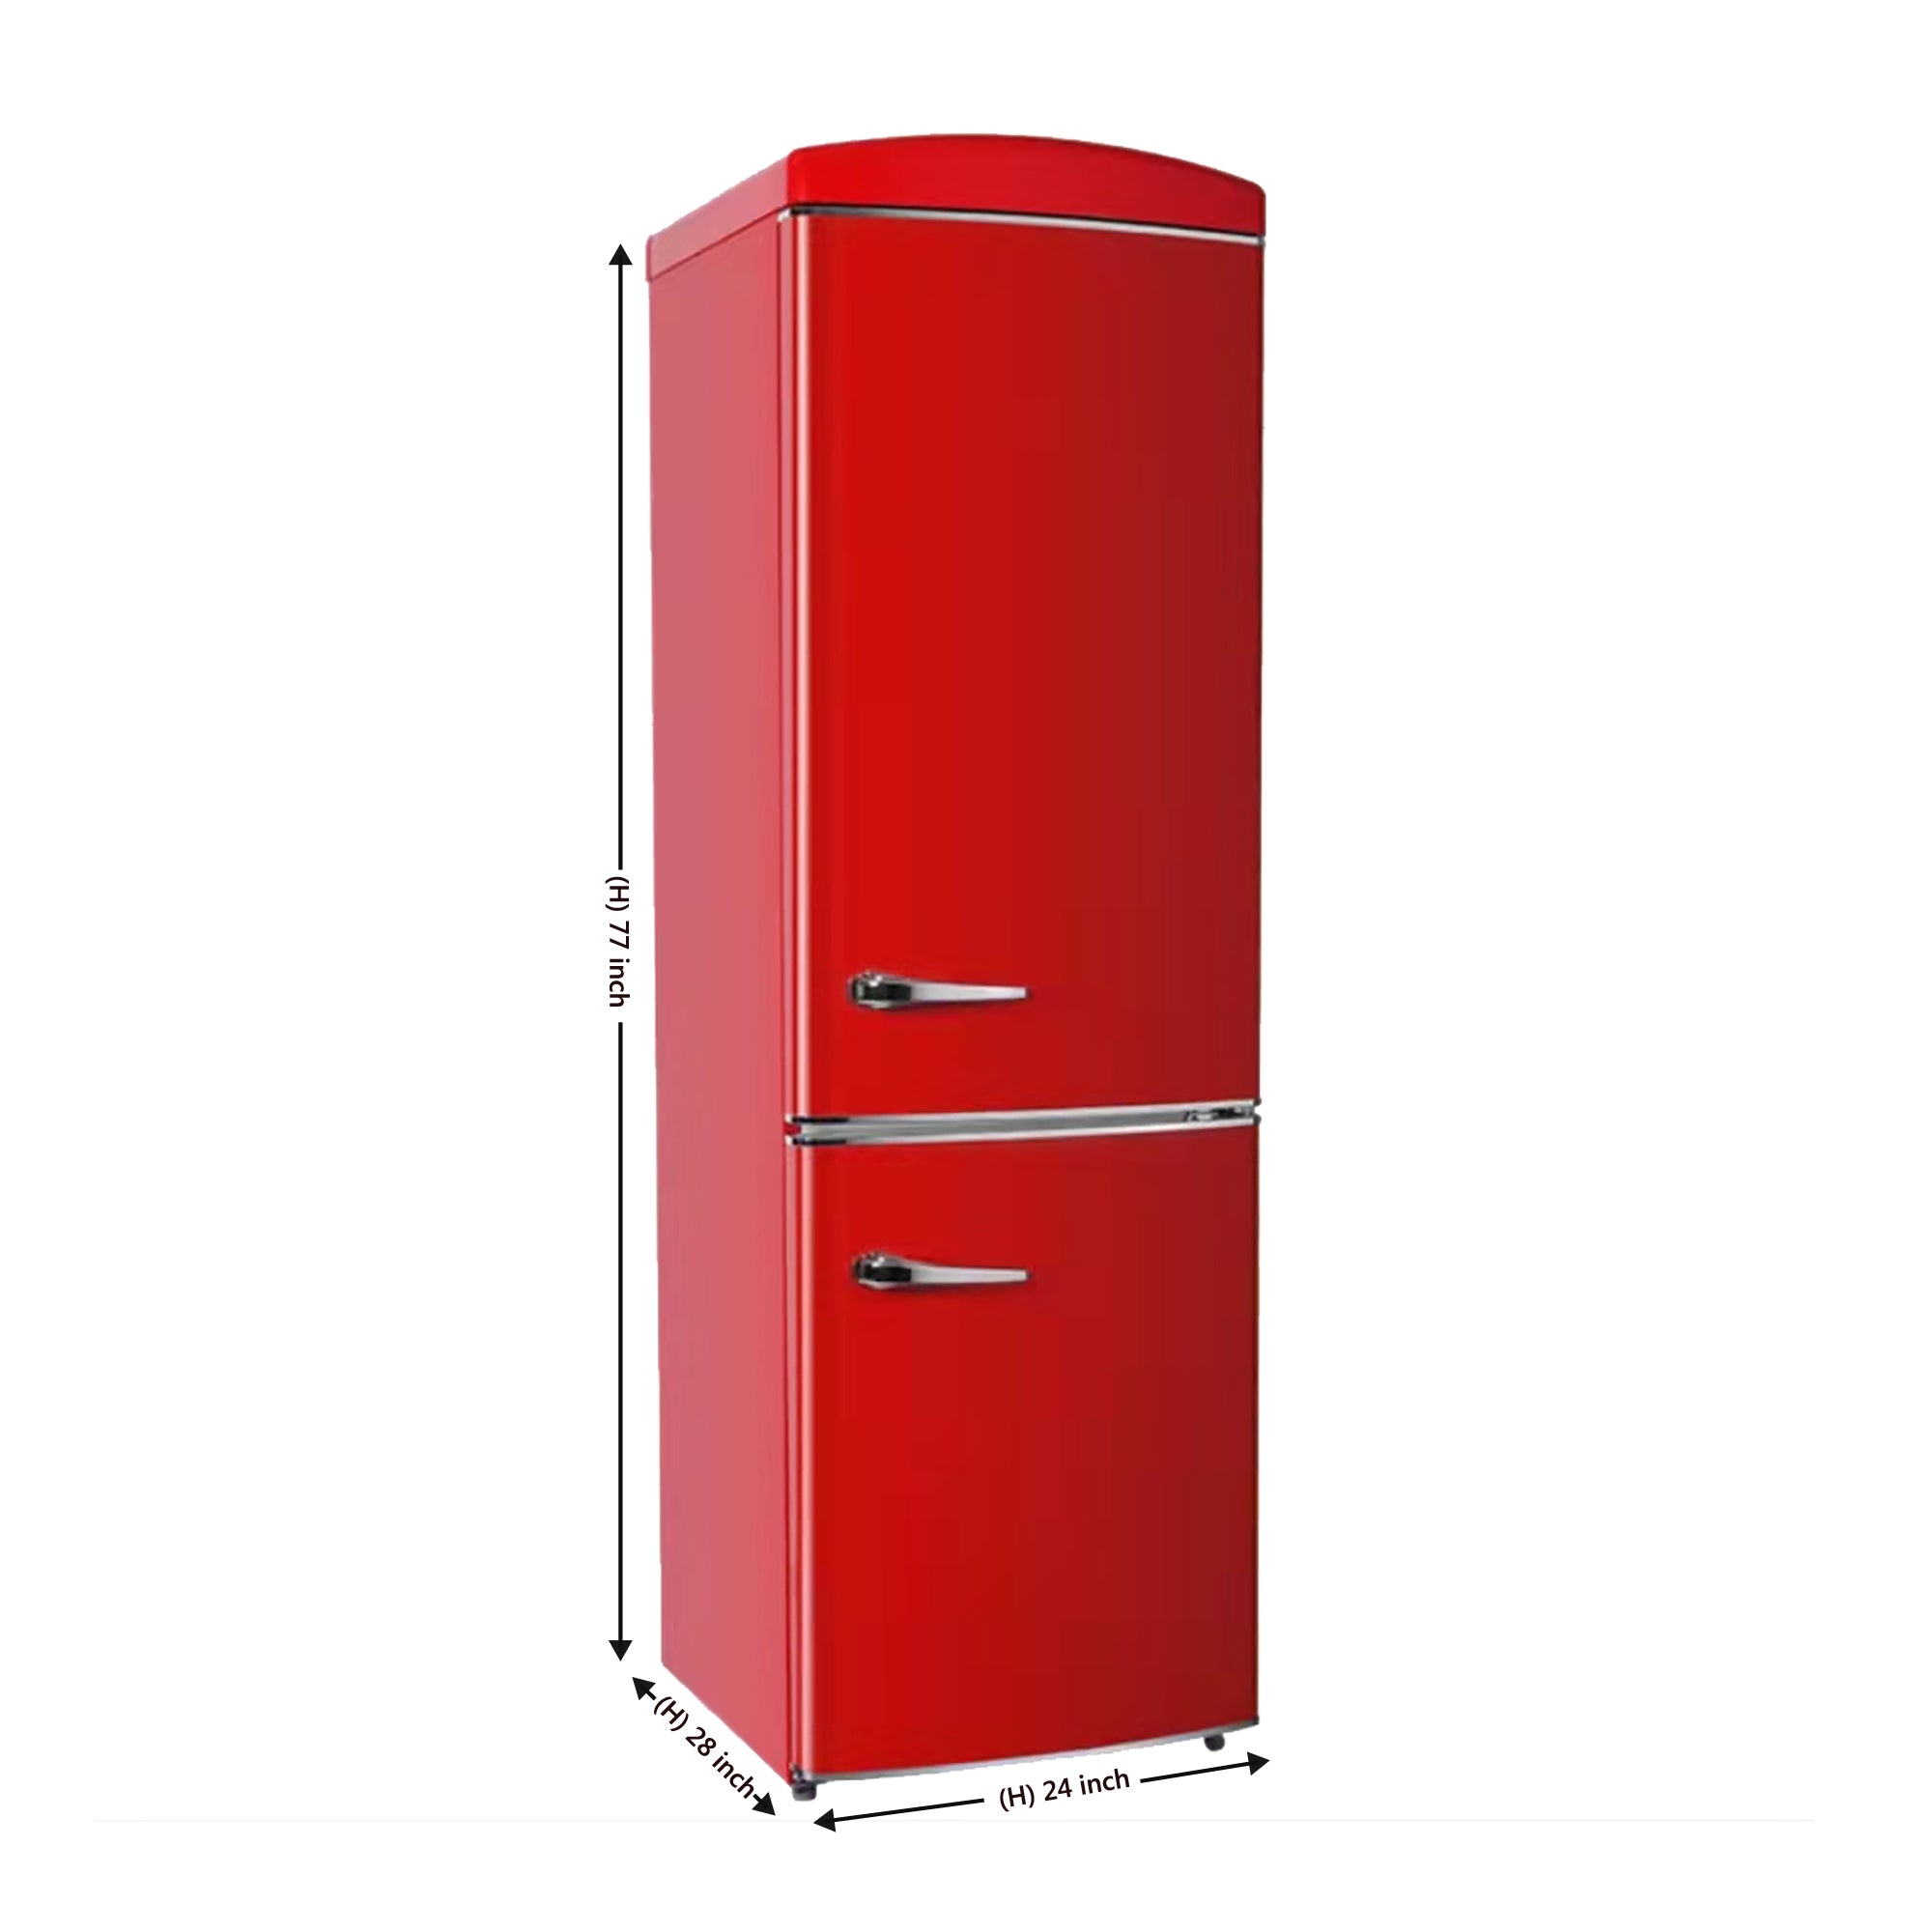 Conserv 10.7 Cu. ft. Bottom Mount Retro Refrigerator - Red